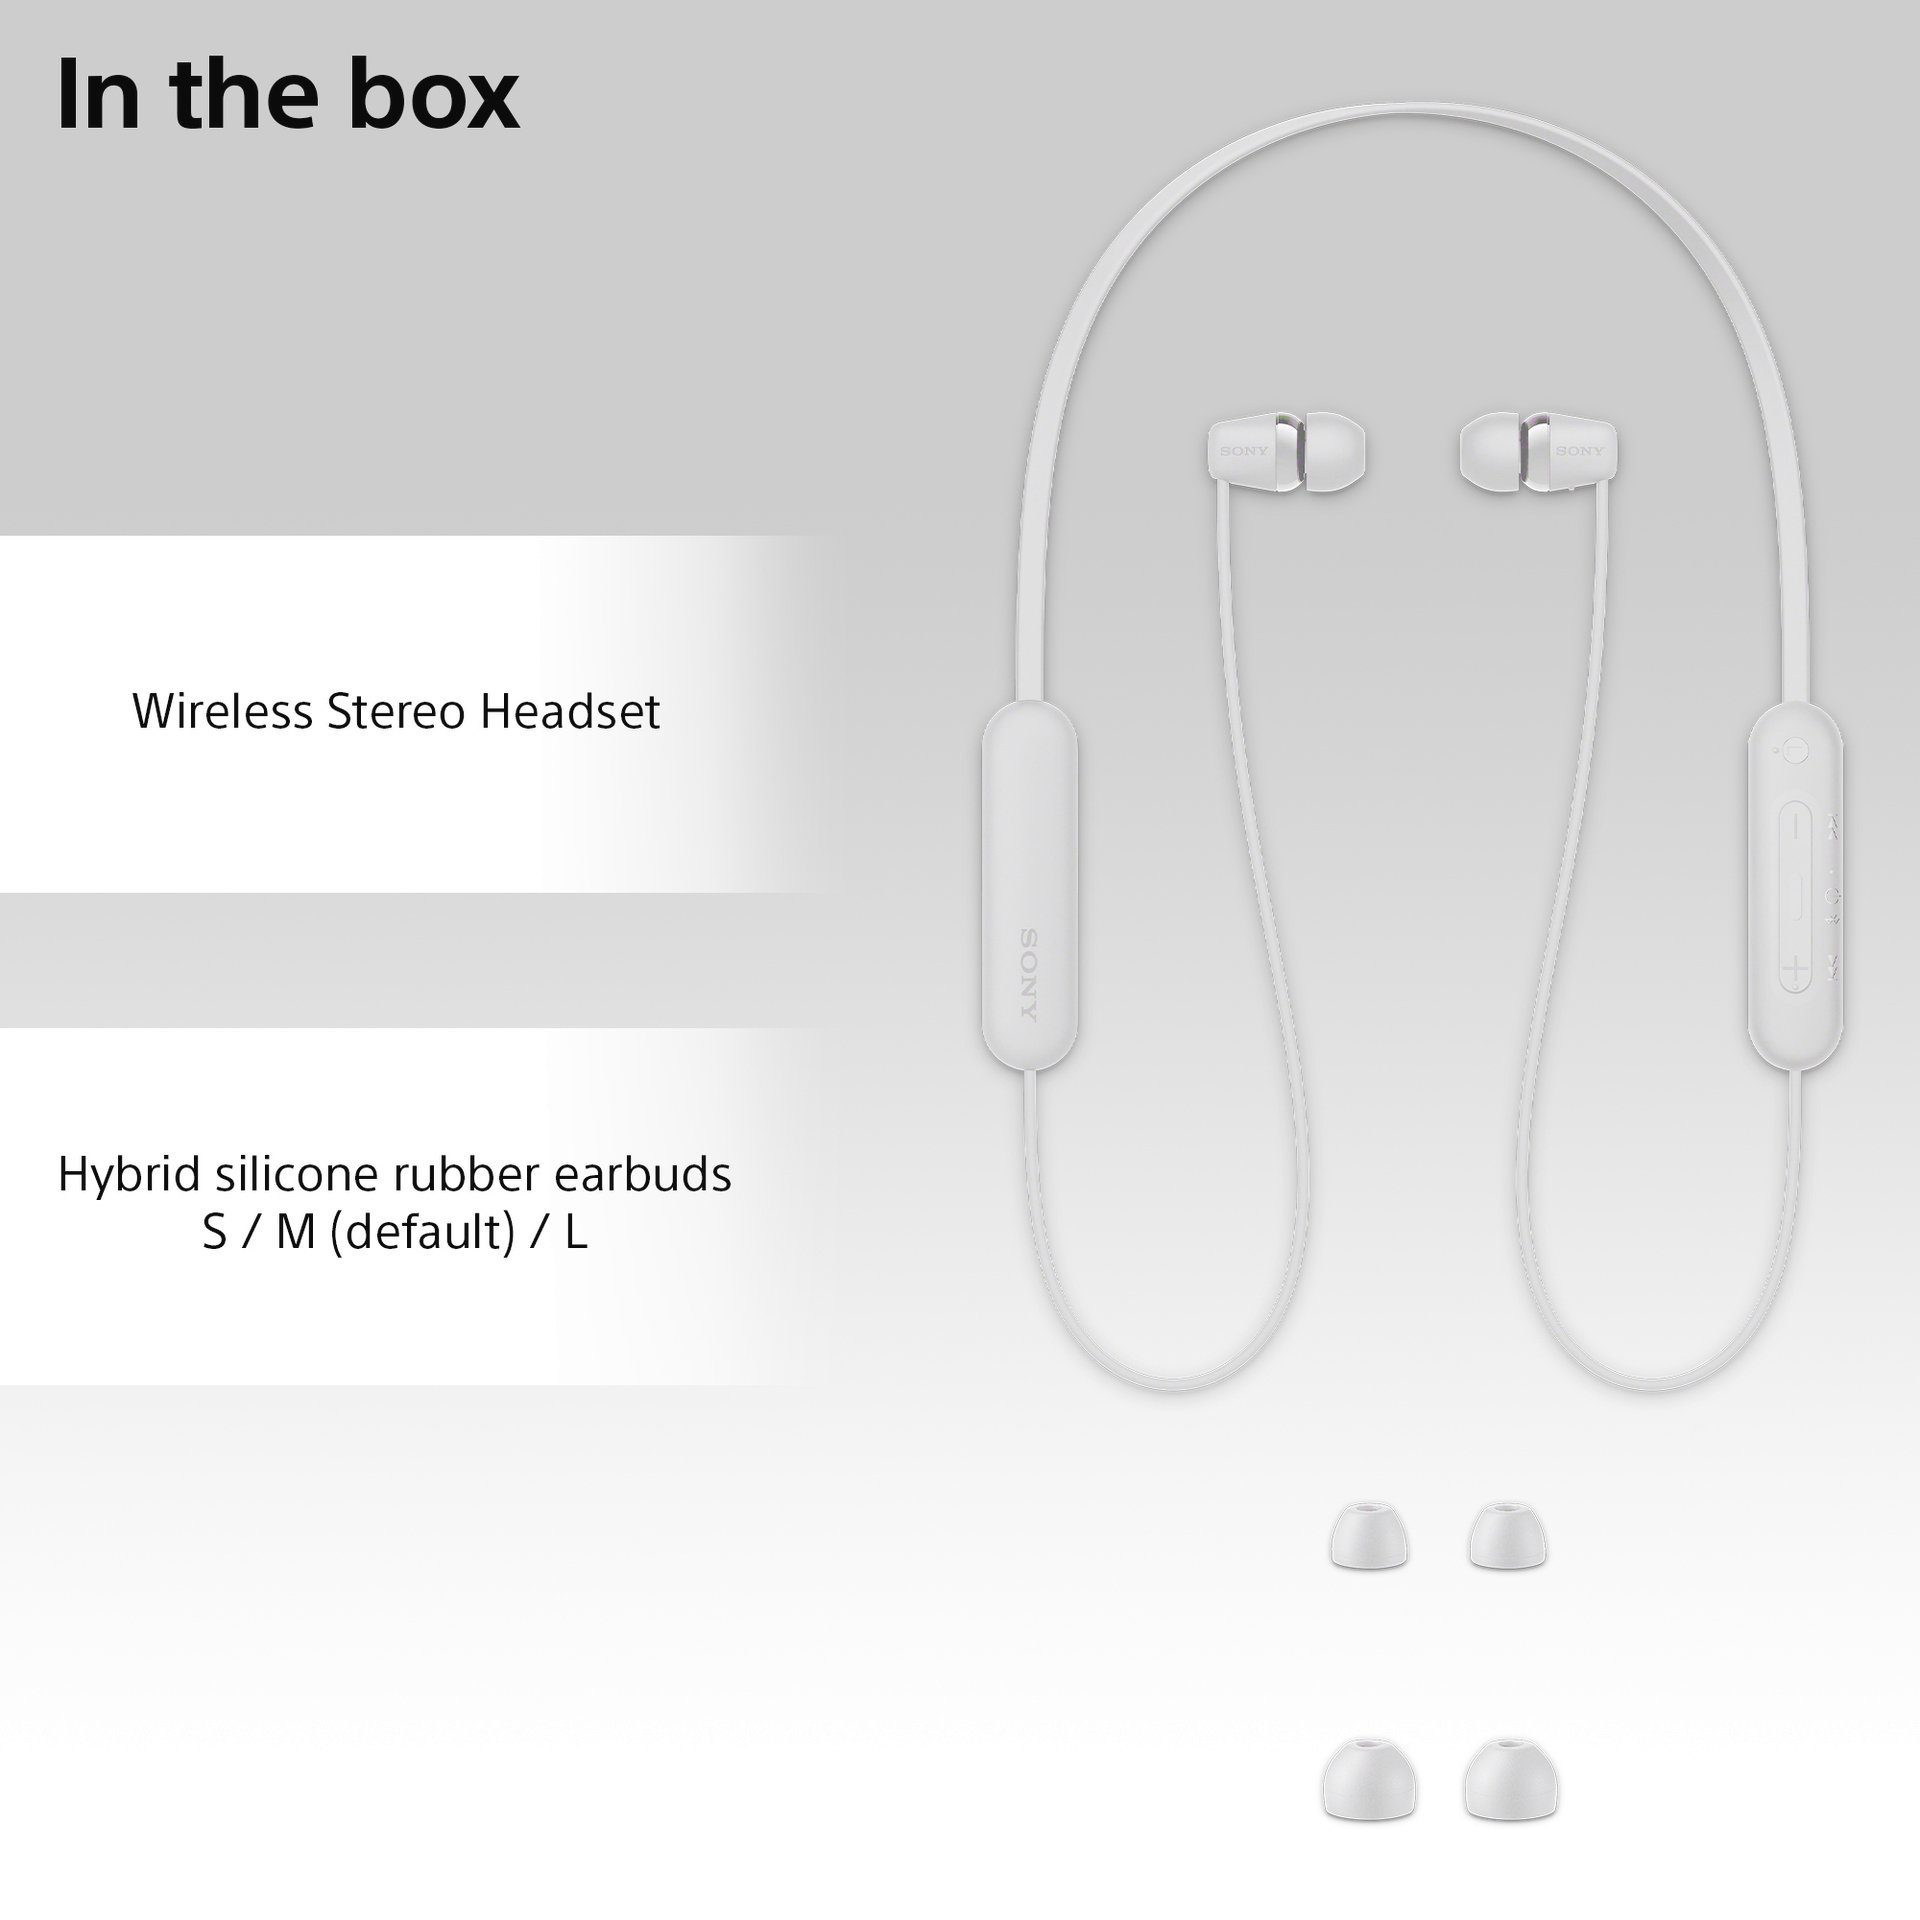 In-Ear-Kopfhörer Sony Kopfhörer In-Ear weiß WI-C100 (Sprachsteuerung)